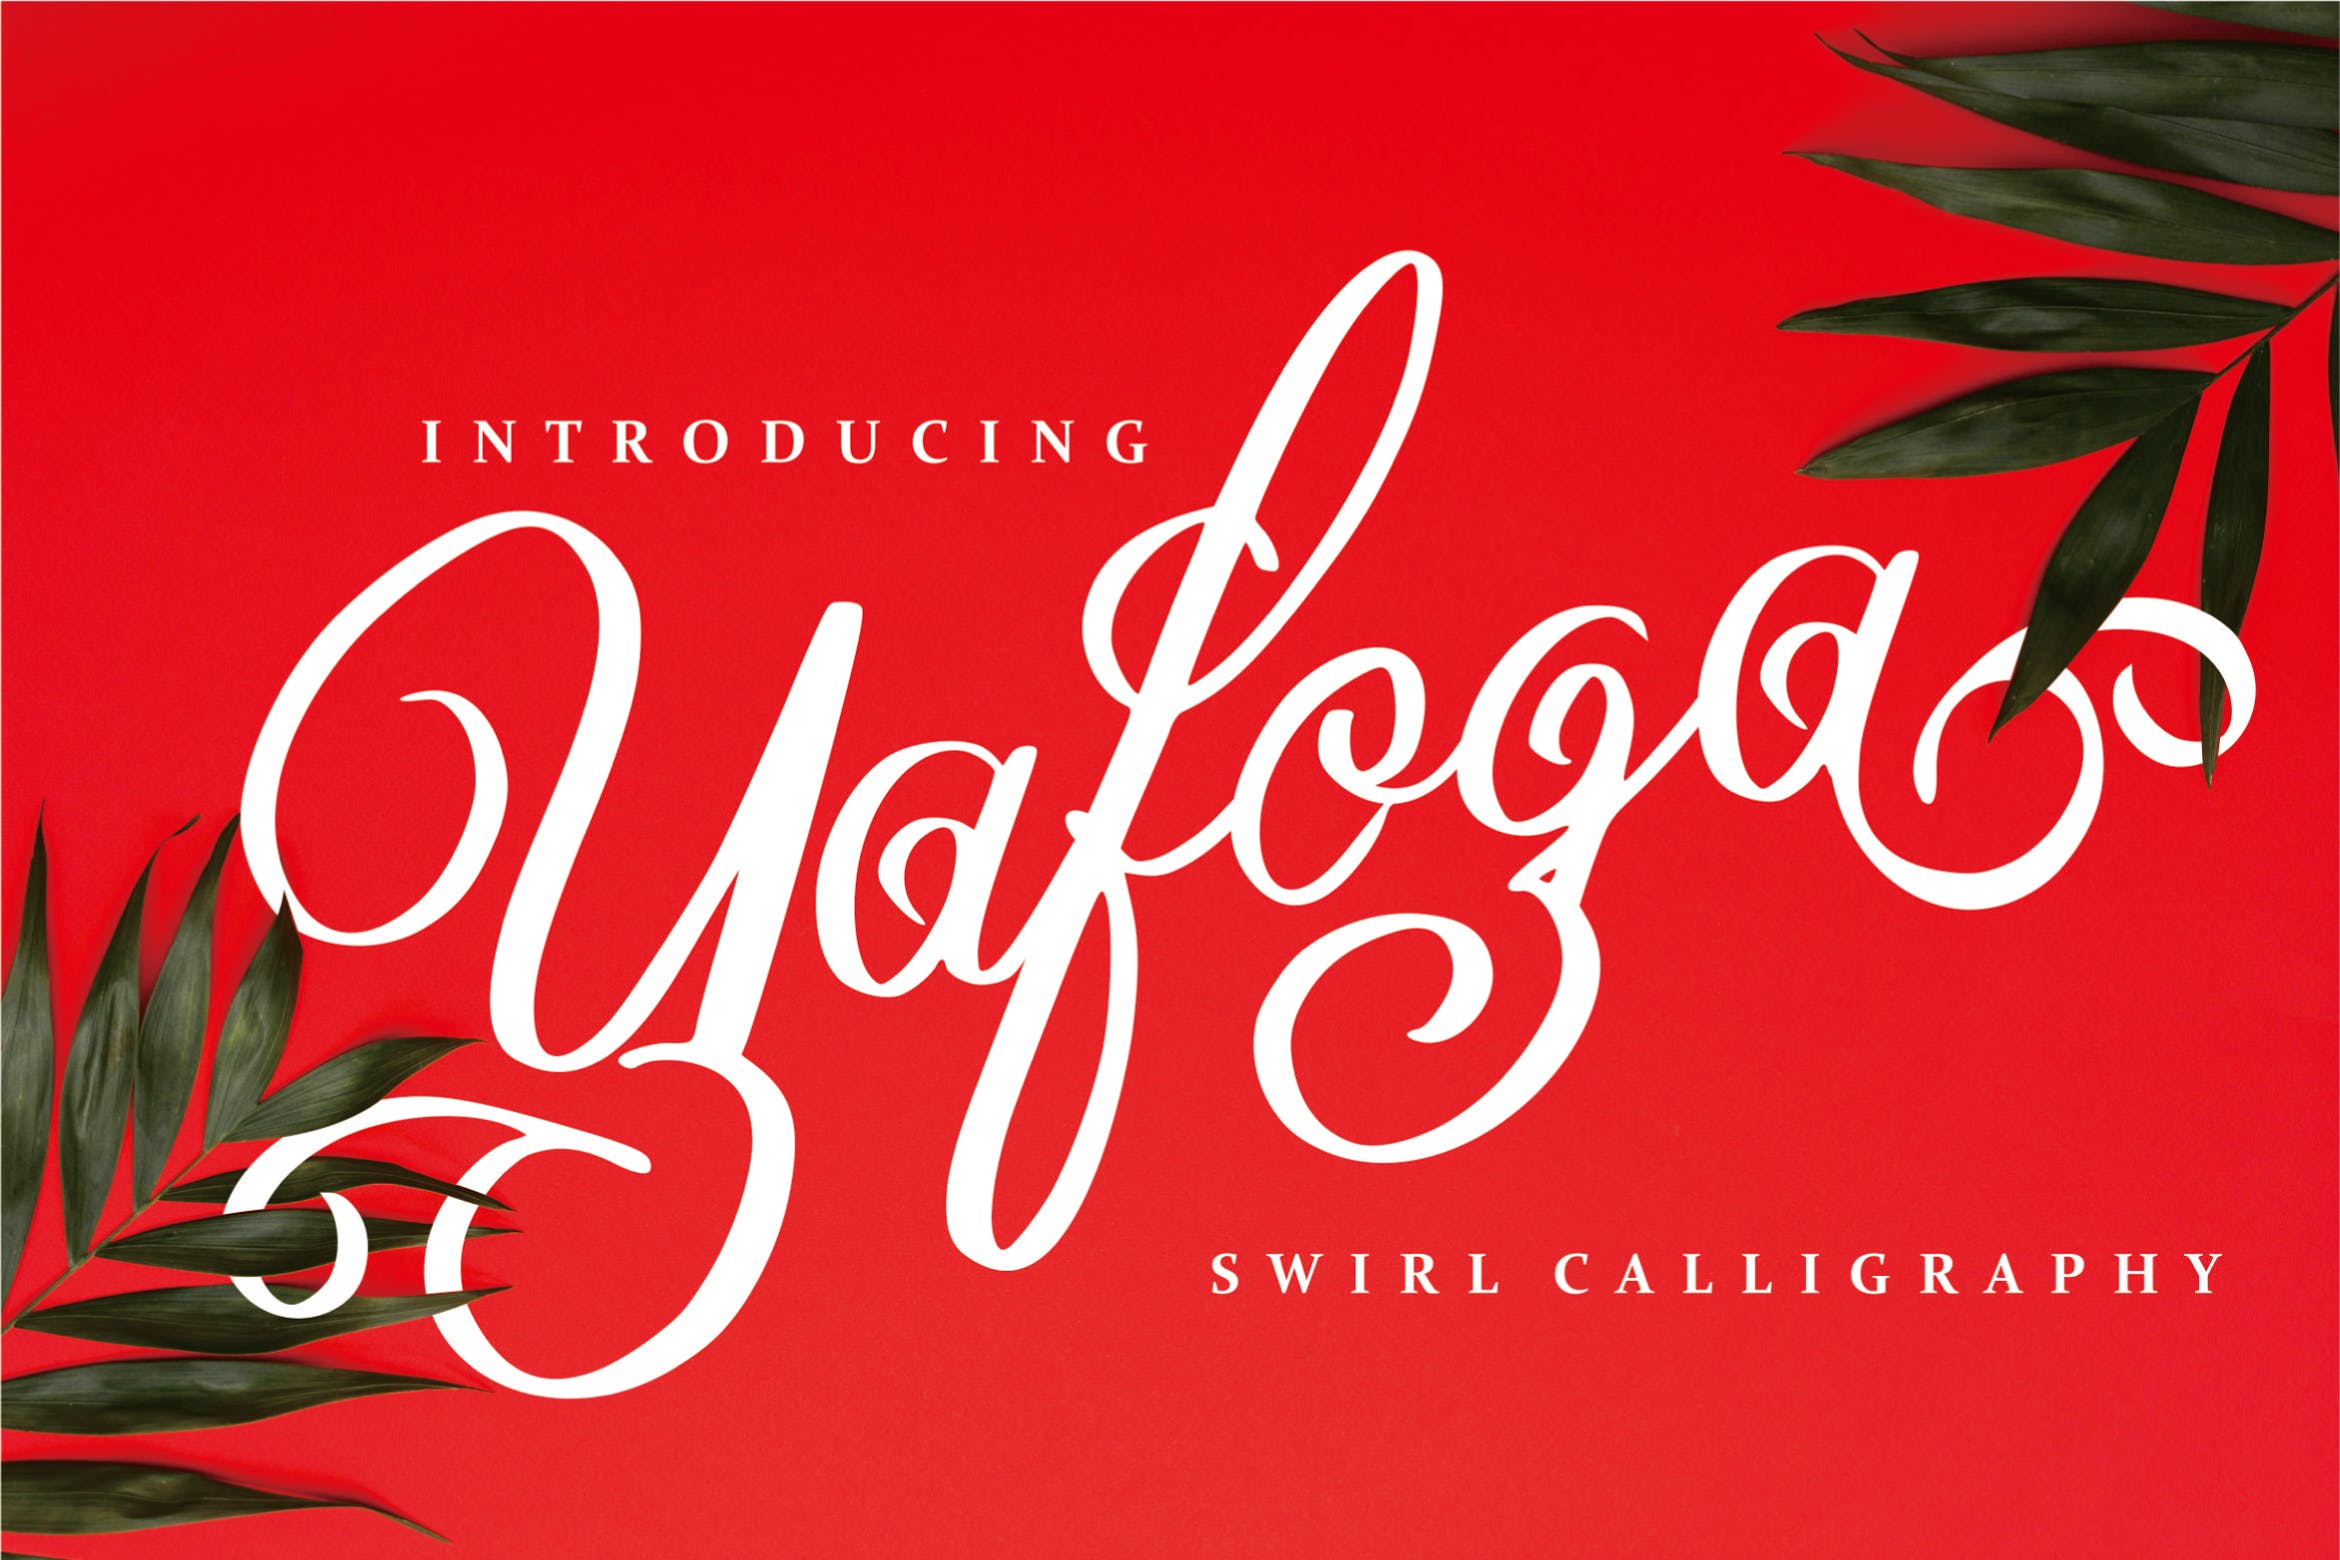 英文旋流书法创意字体下载 Yafoga – Swirl Calligraphy插图